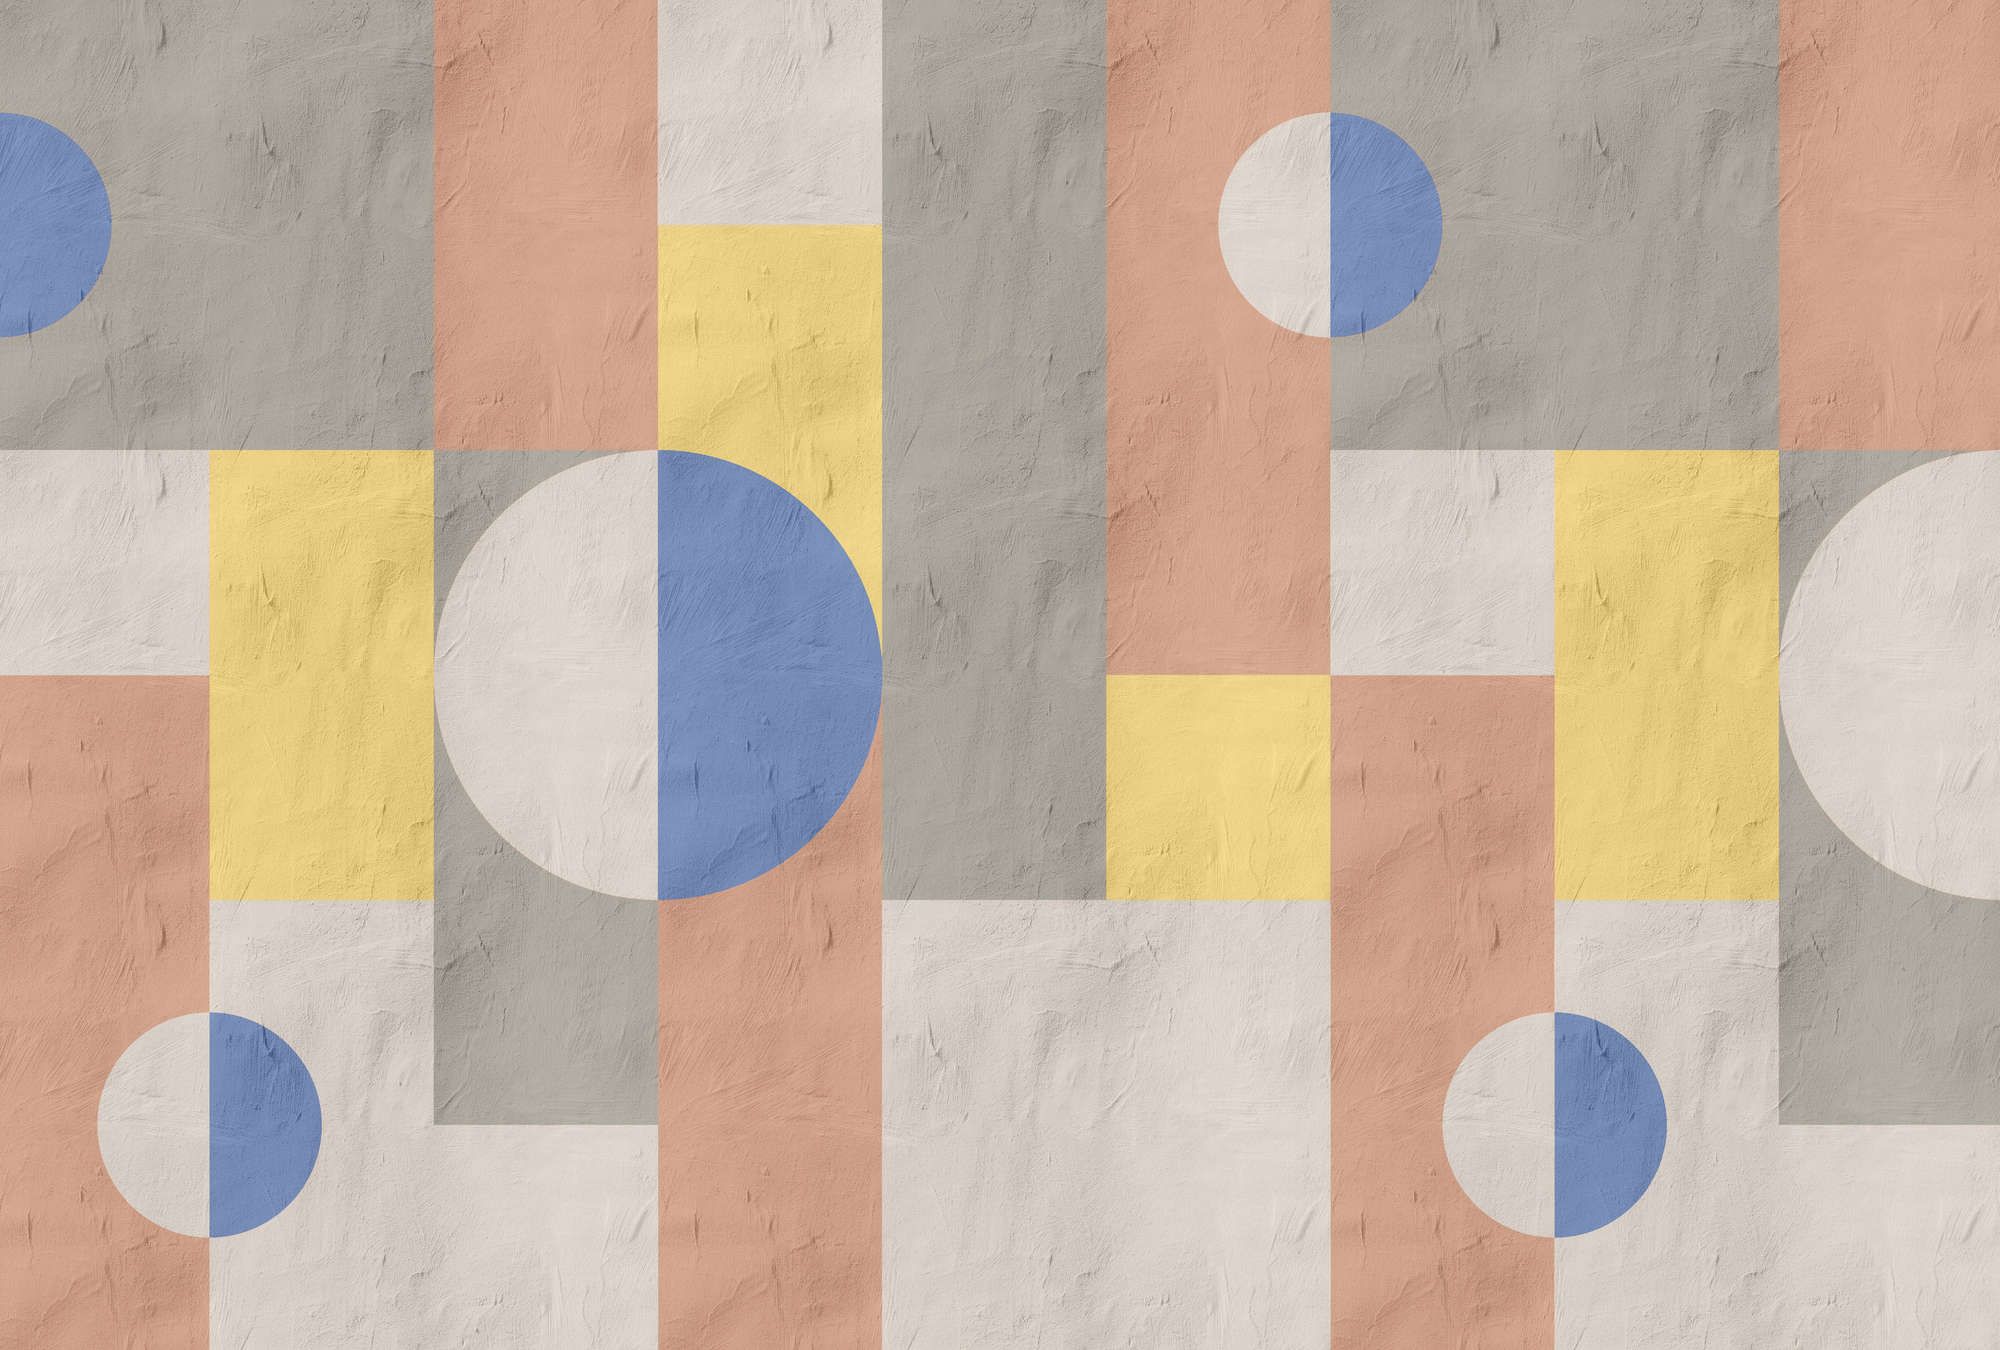             Photo wallpaper »estrella 1« - Graphic pattern in clay plaster look - Blue, yellow, orange | Lightly textured non-woven
        